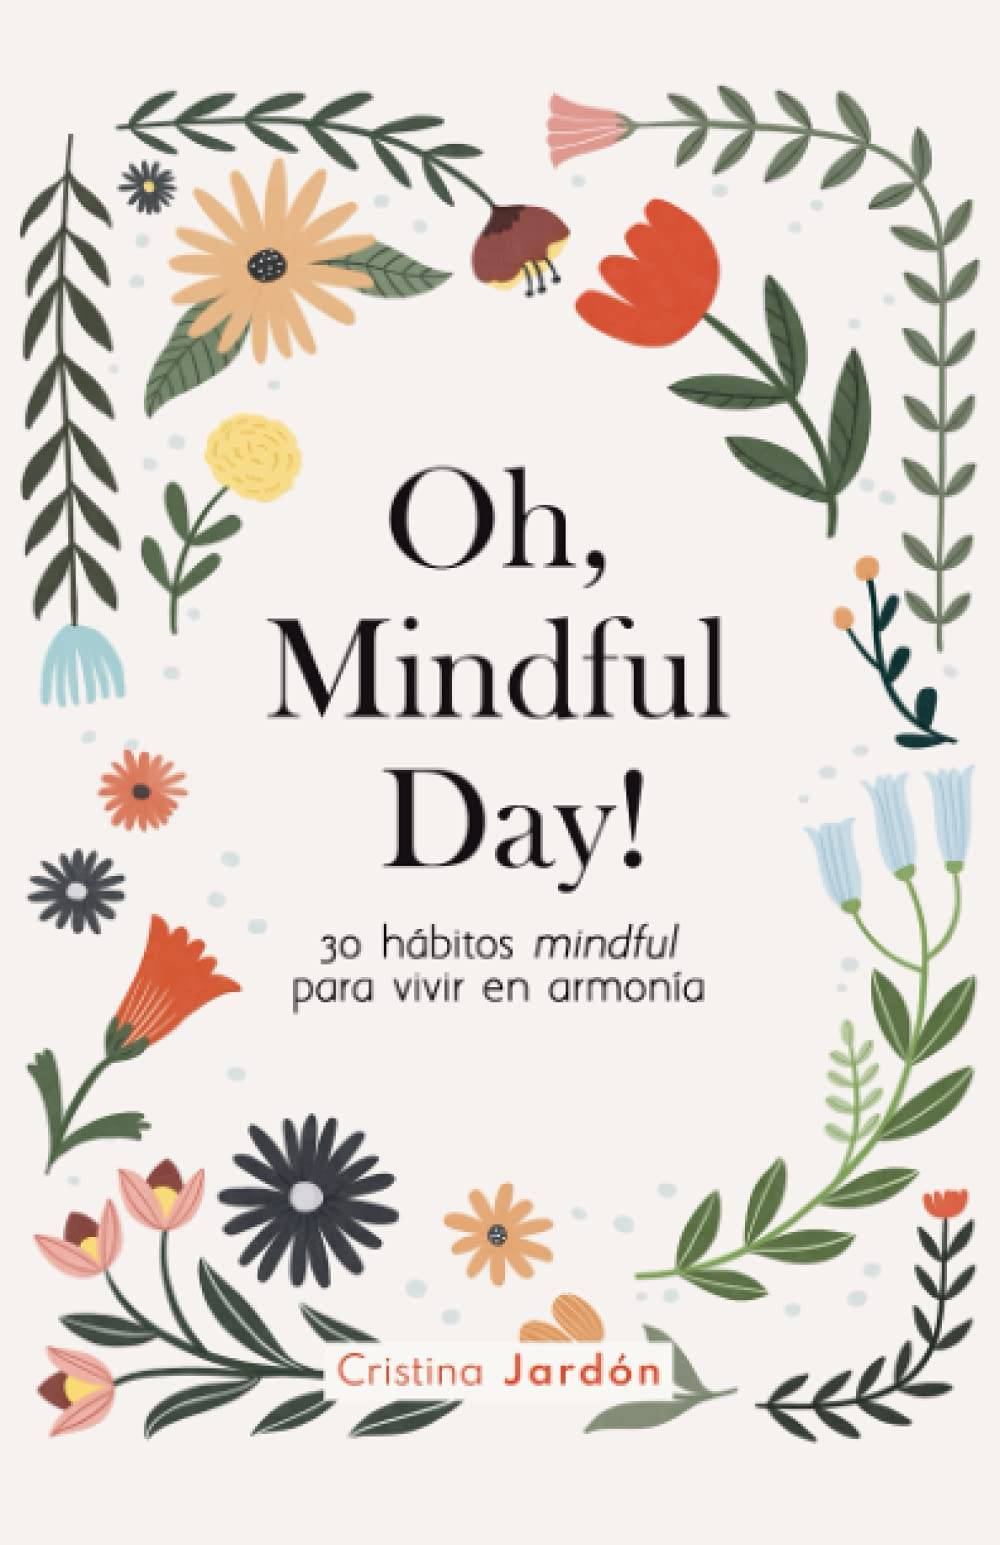 Portada libro "Oh, Mindful Day!"